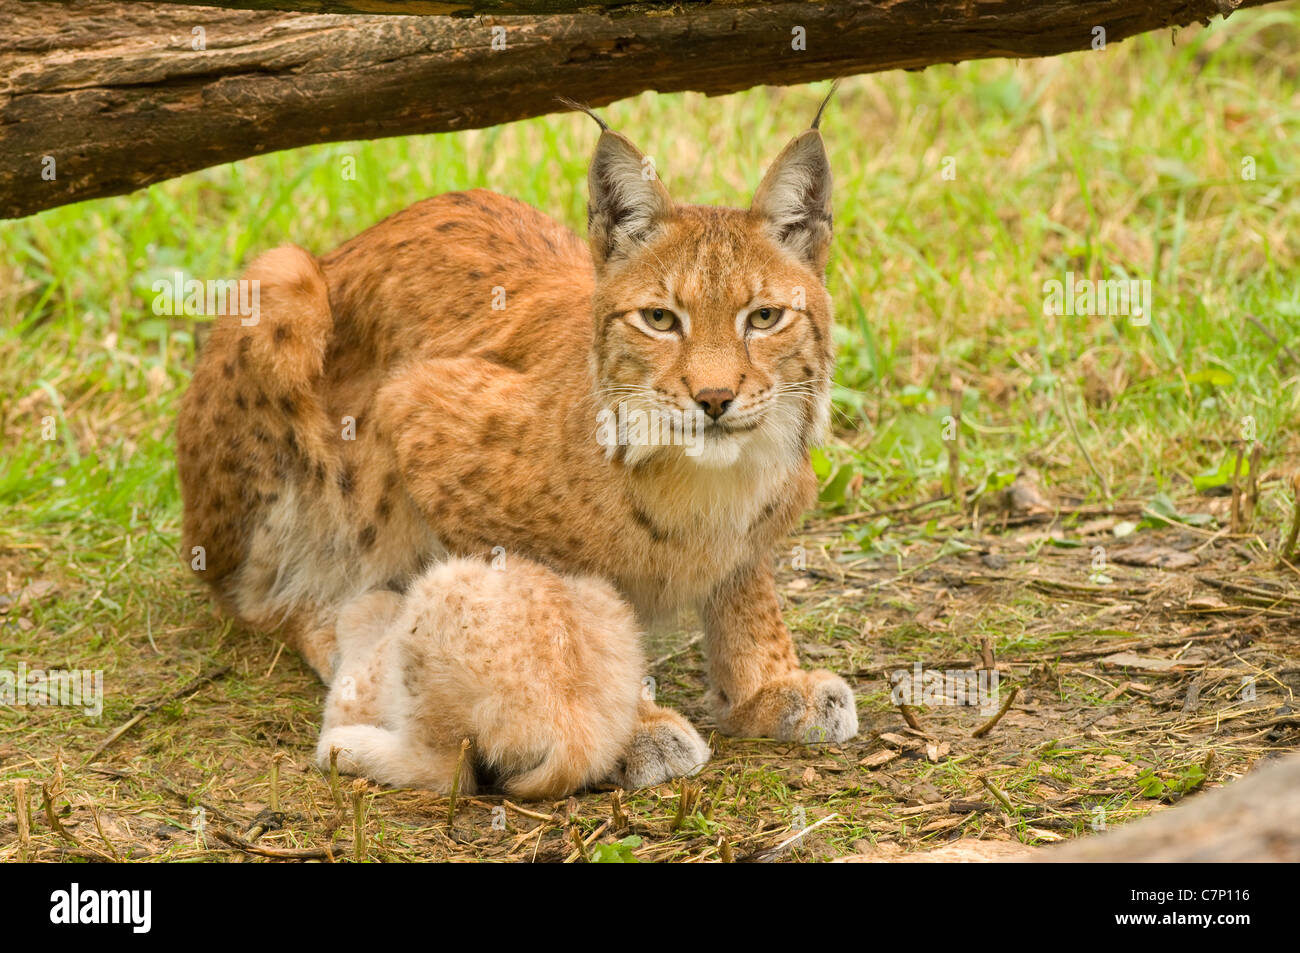 Eurasian lynx (Lynx lynx) - adult female sitting in grass with young - Summer, Gaiapark Kerkrade, the Netherlands,Western Europe Stock Photo